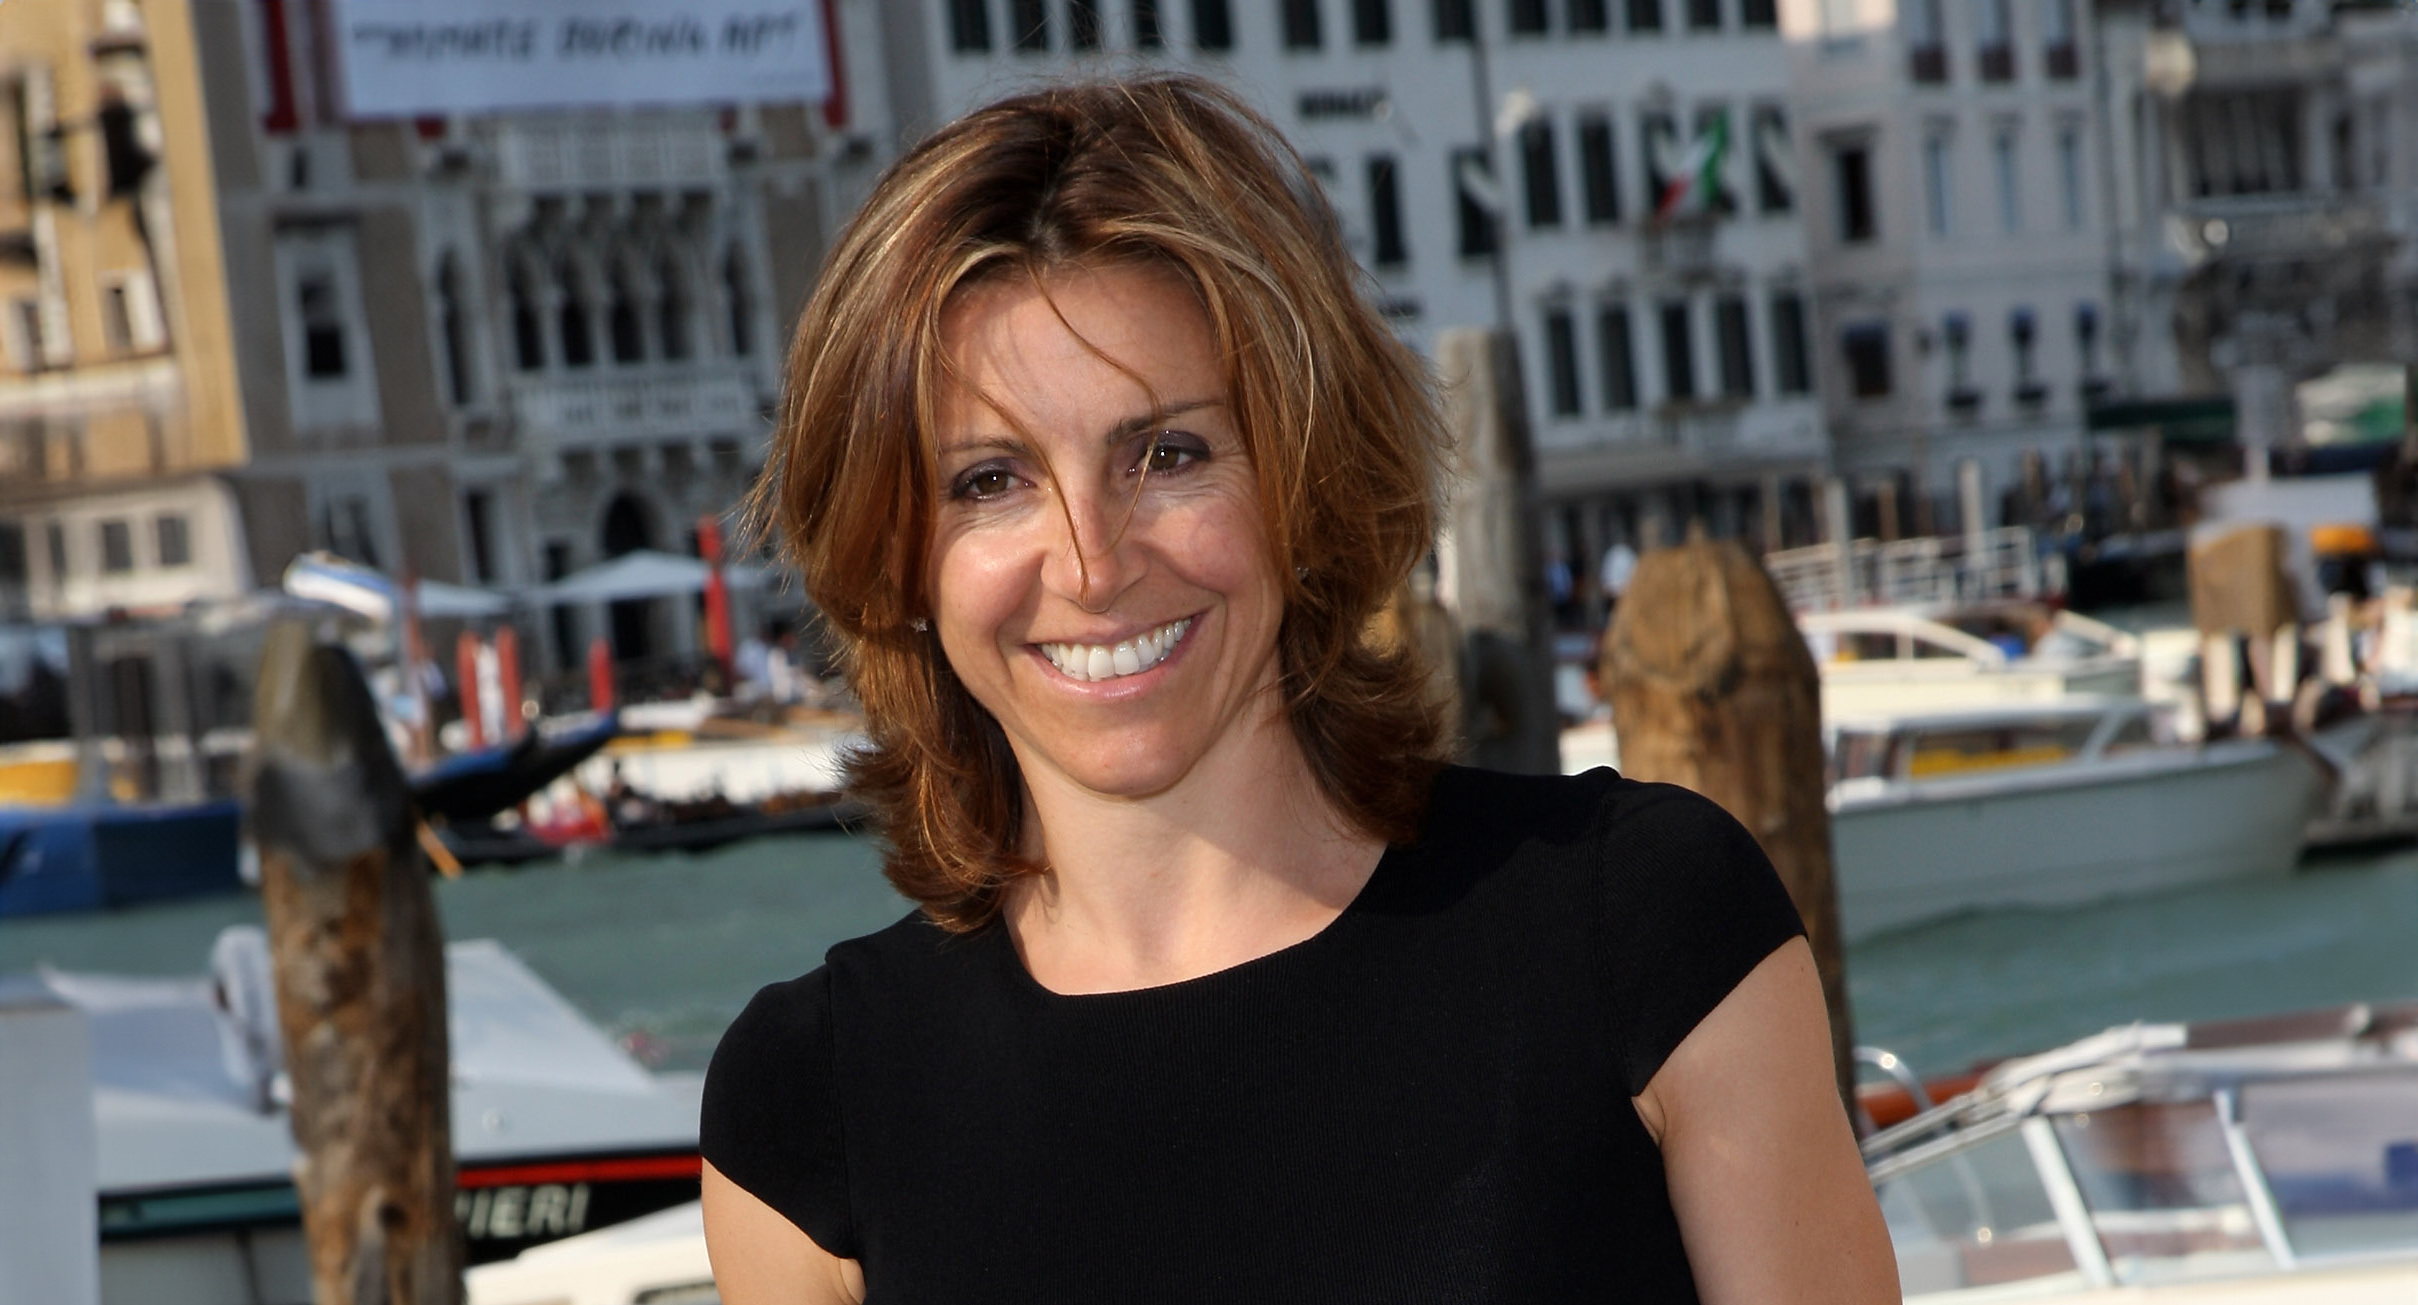 Image of Deborah Compagnoni smiling